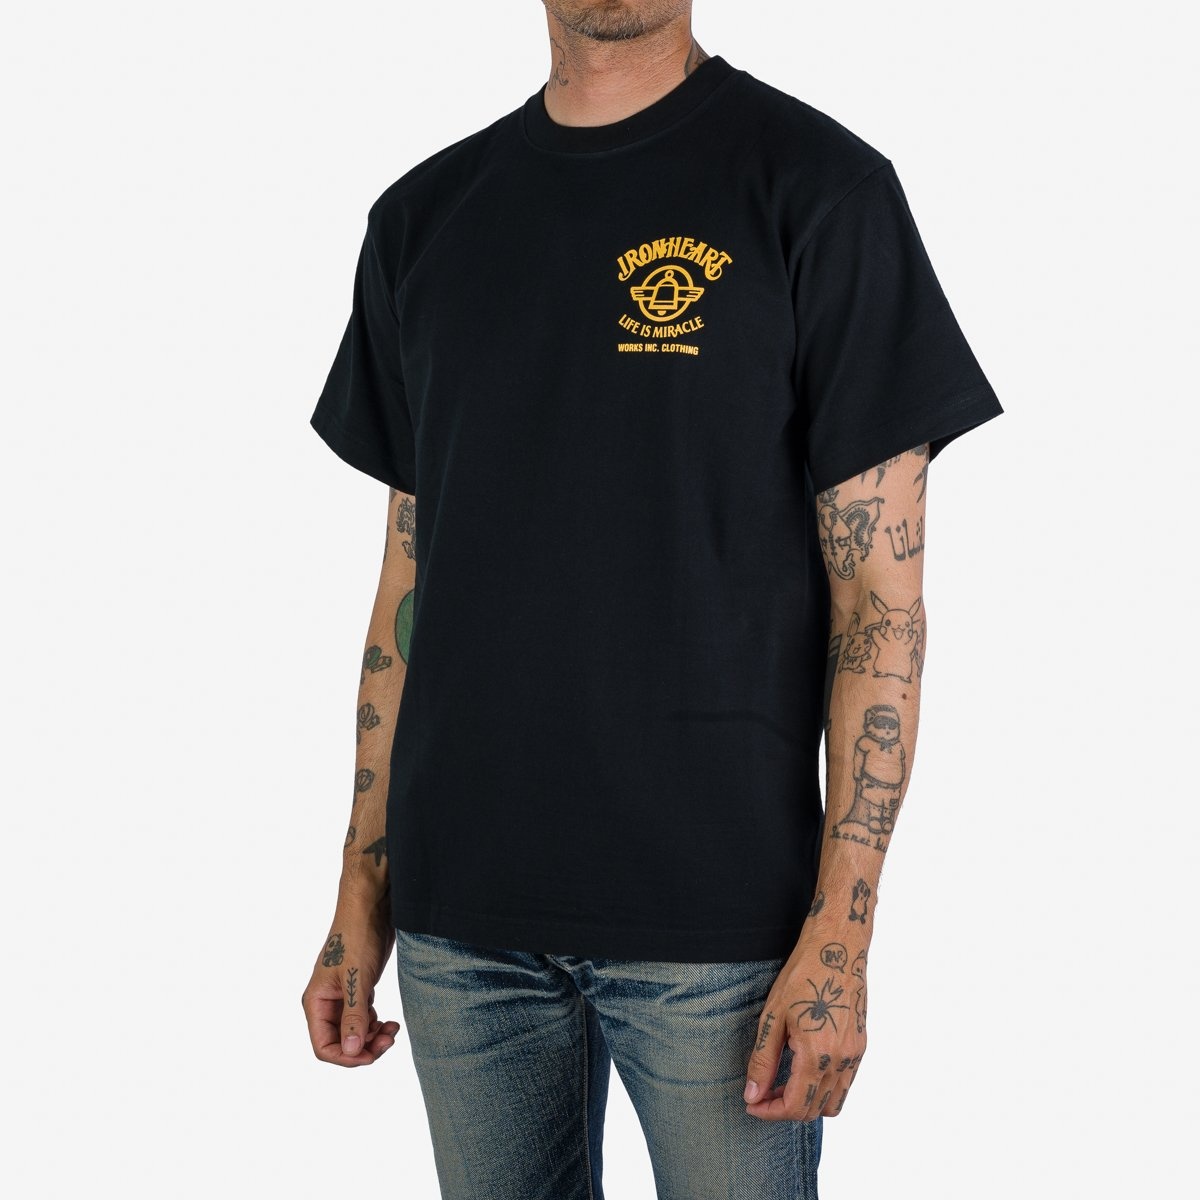 IHPT-2306-BLK 7.5oz Printed Loopwheel Crew Neck T-Shirt - Black - 2